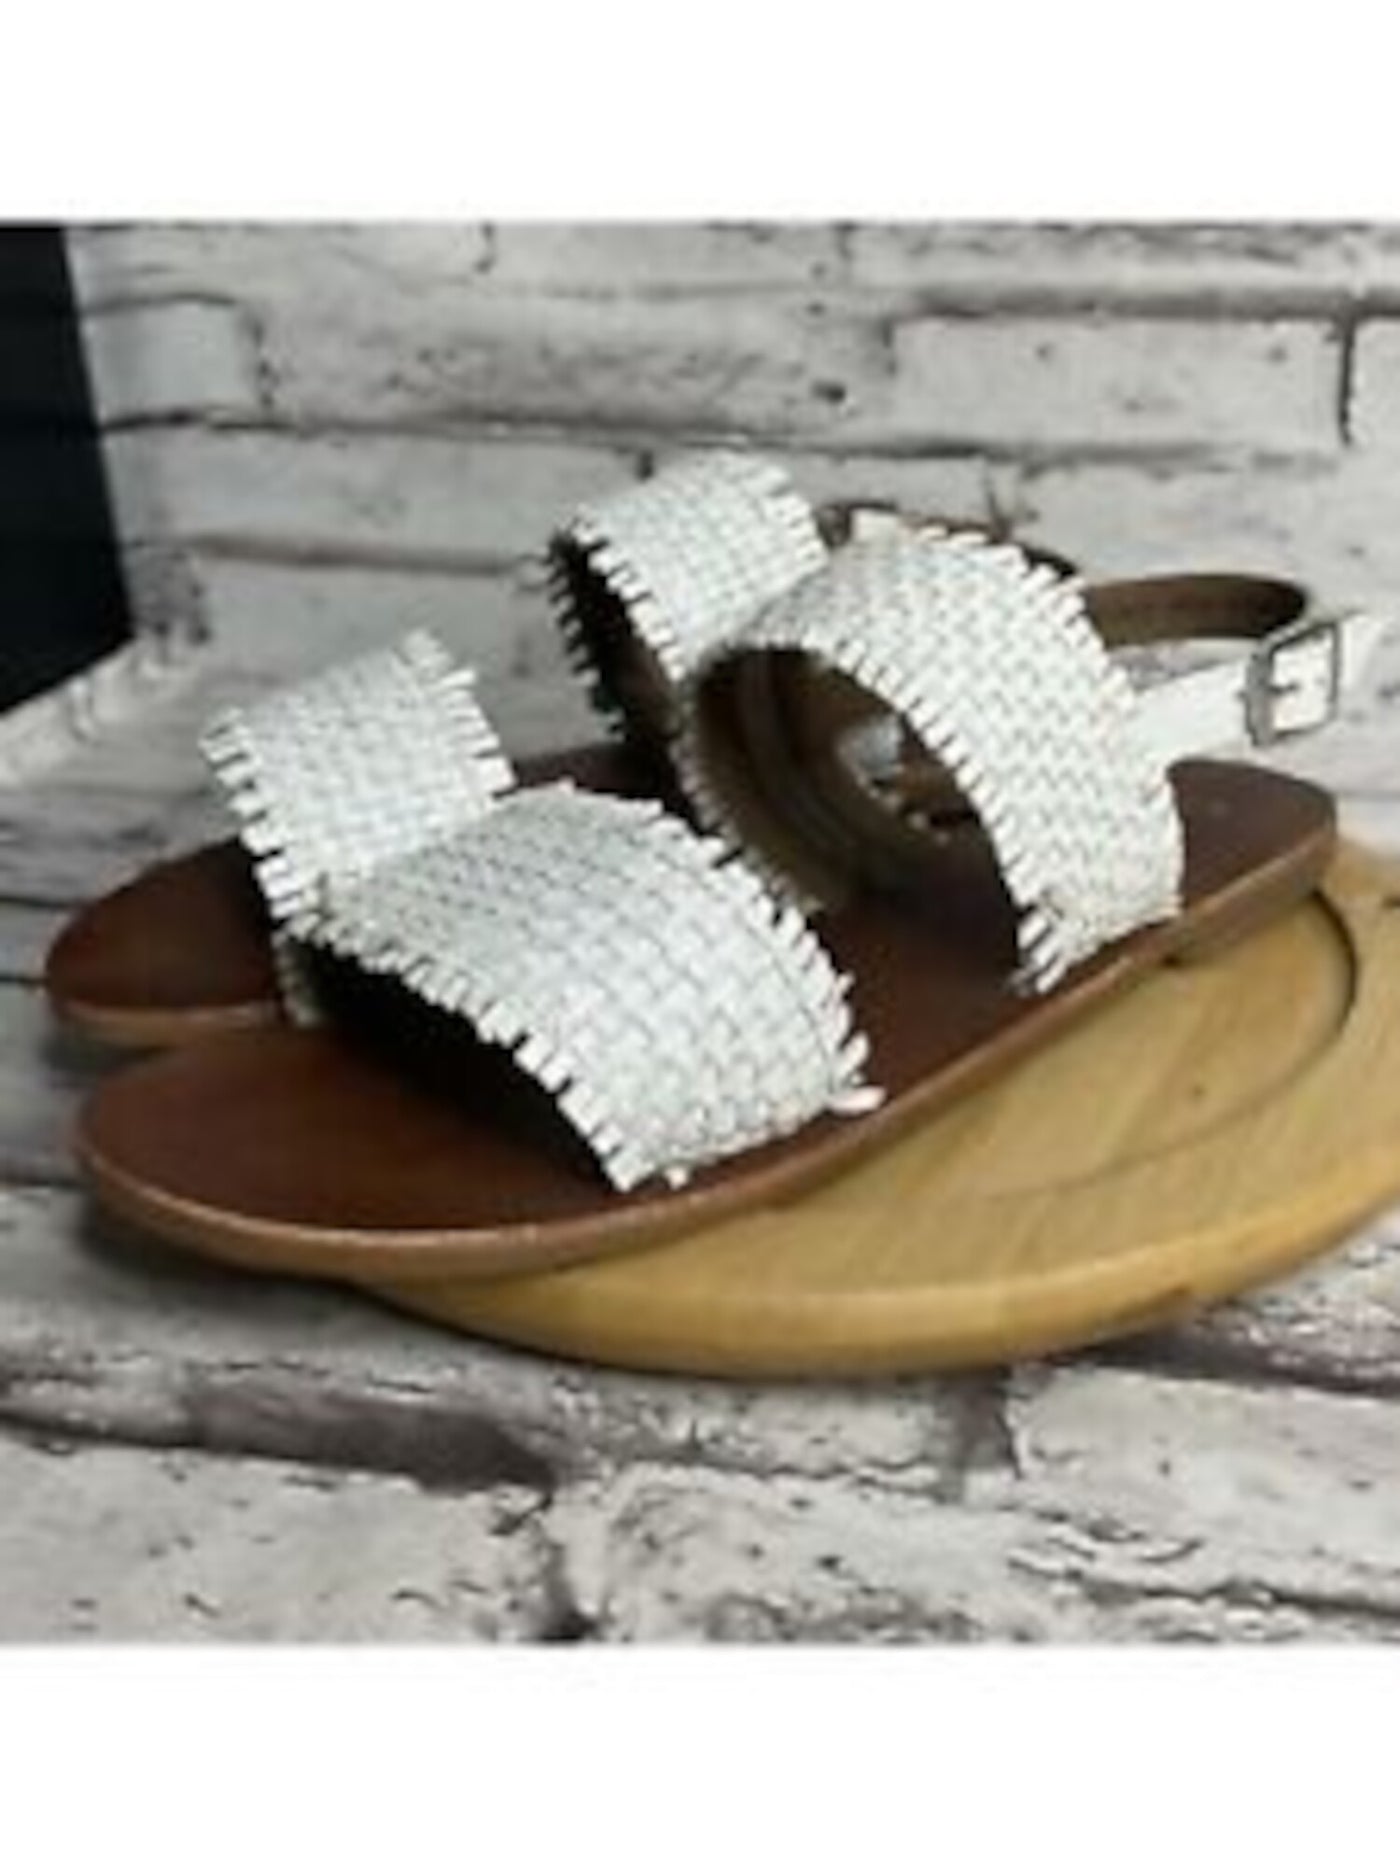 SPLENDID Womens White Woven Adjustable Strap Thomas Round Toe Block Heel Buckle Leather Sandals Shoes 7.5 M